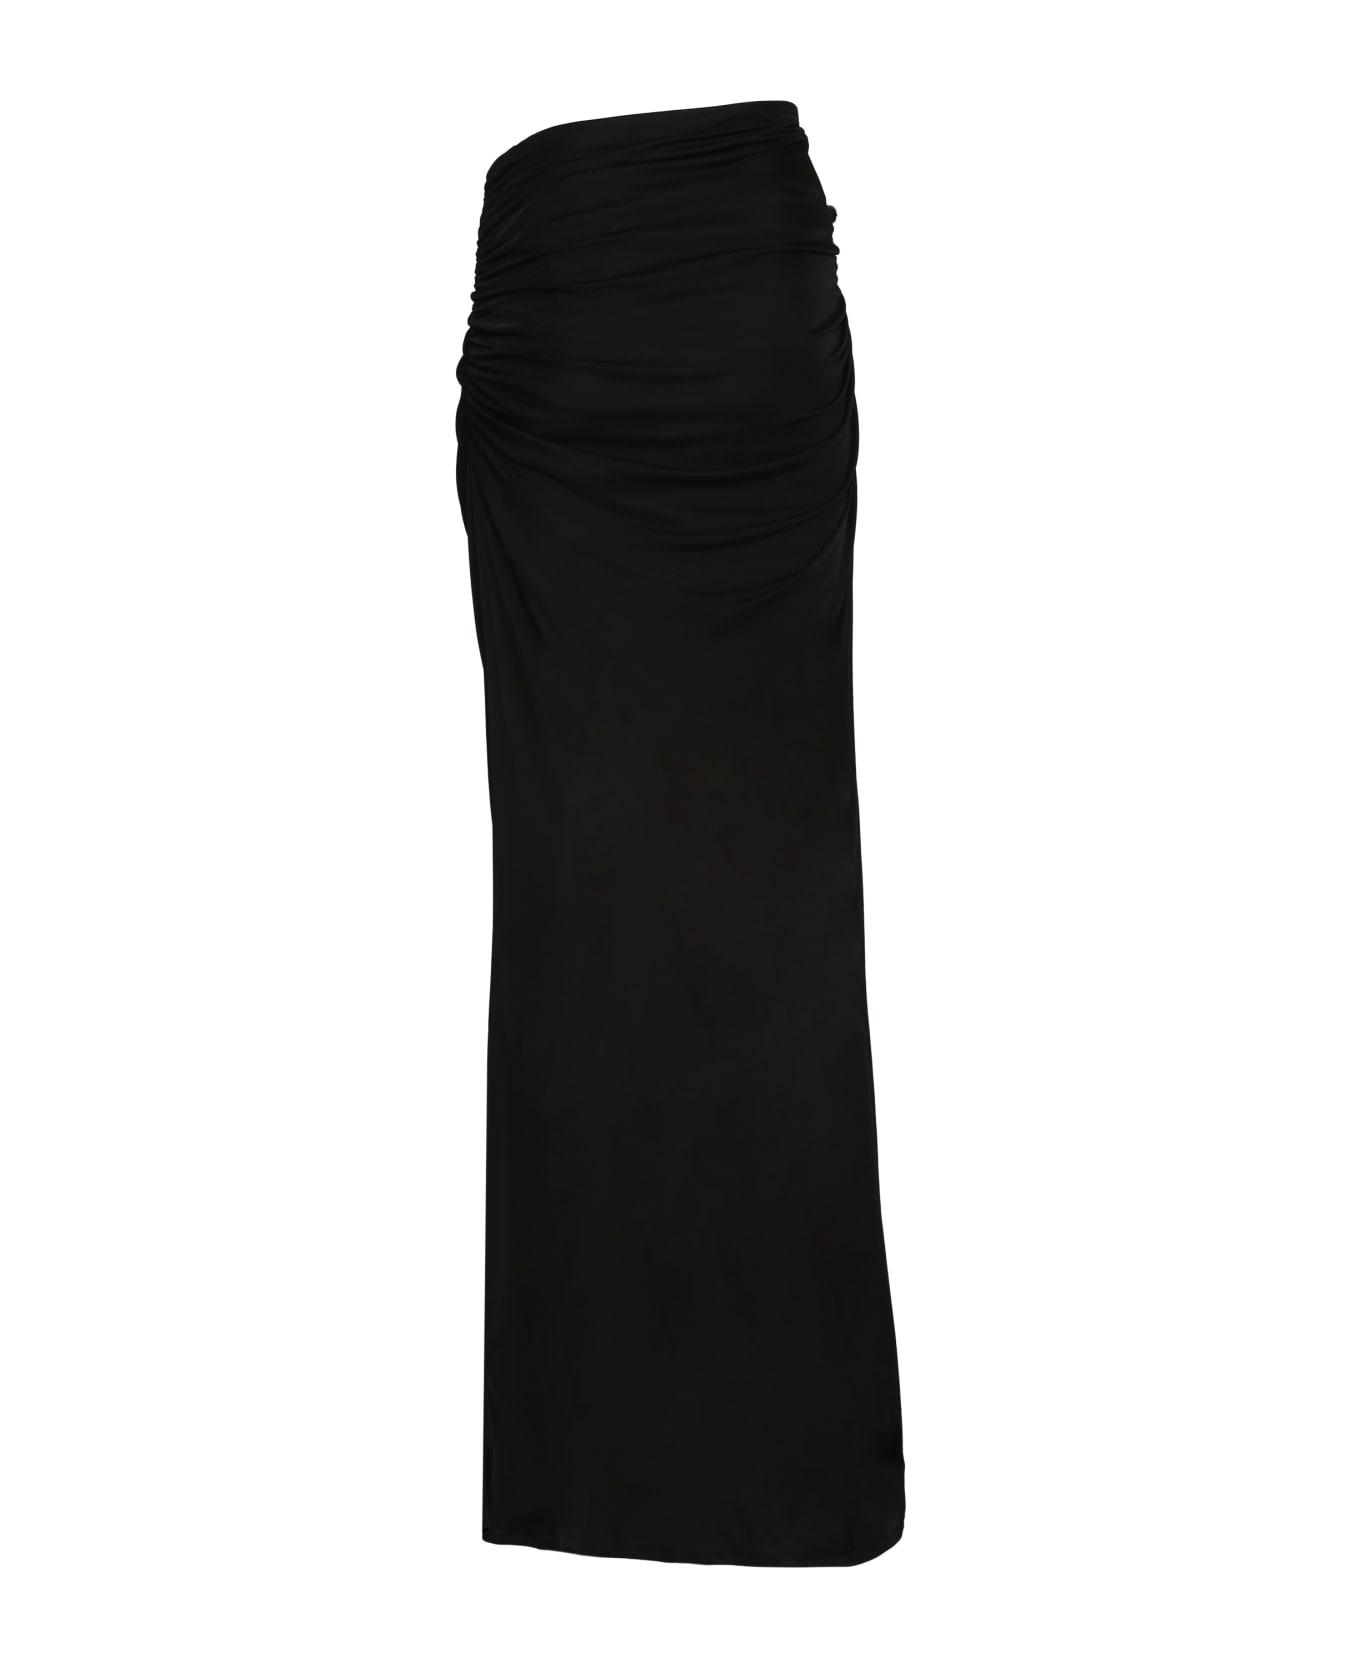 ANDREĀDAMO Draped Skirt - black スカート